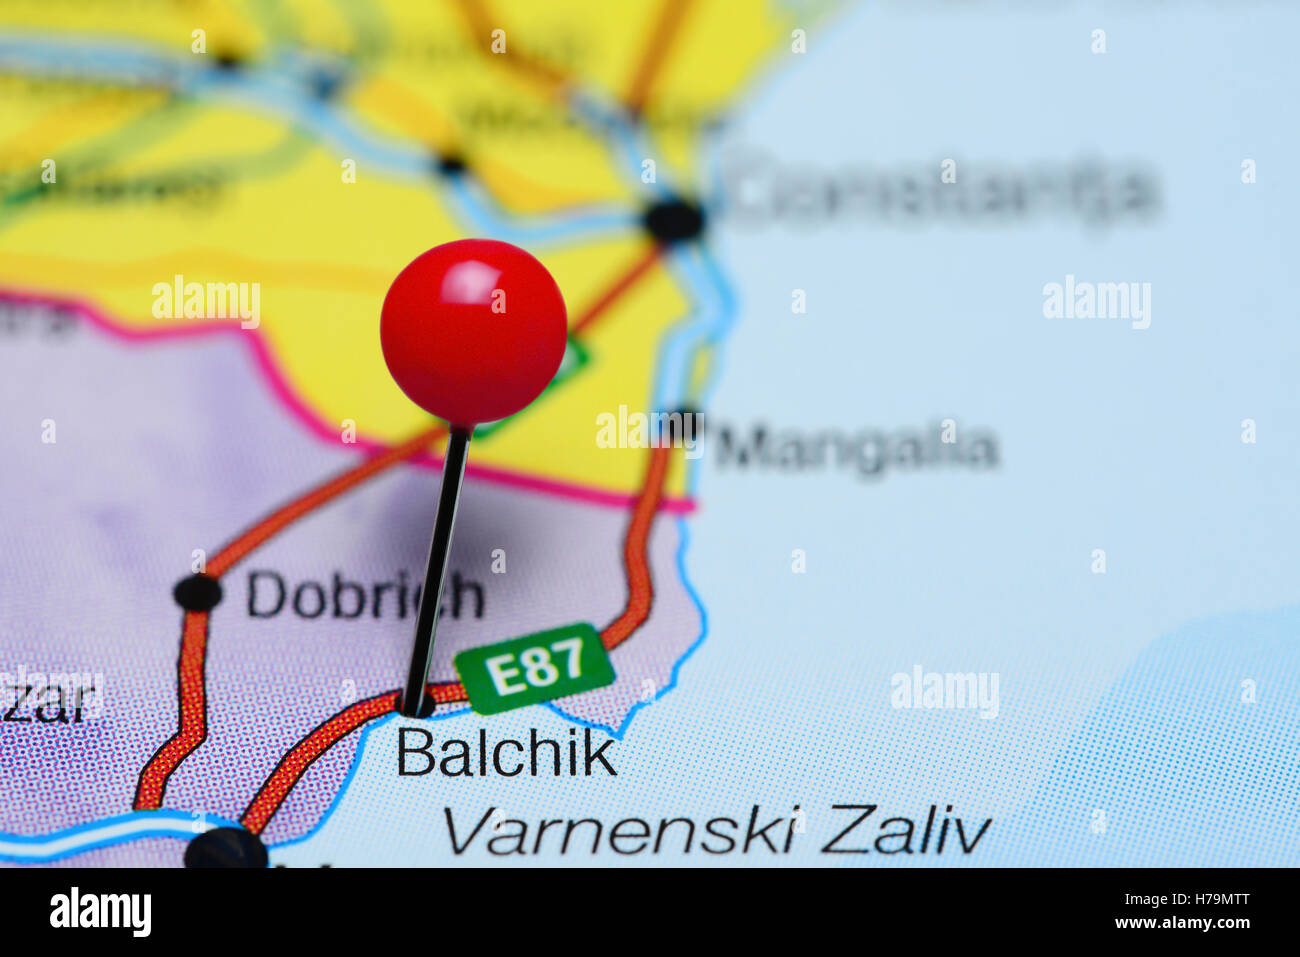 Balchik pinned on a map of Bulgaria Stock Photo